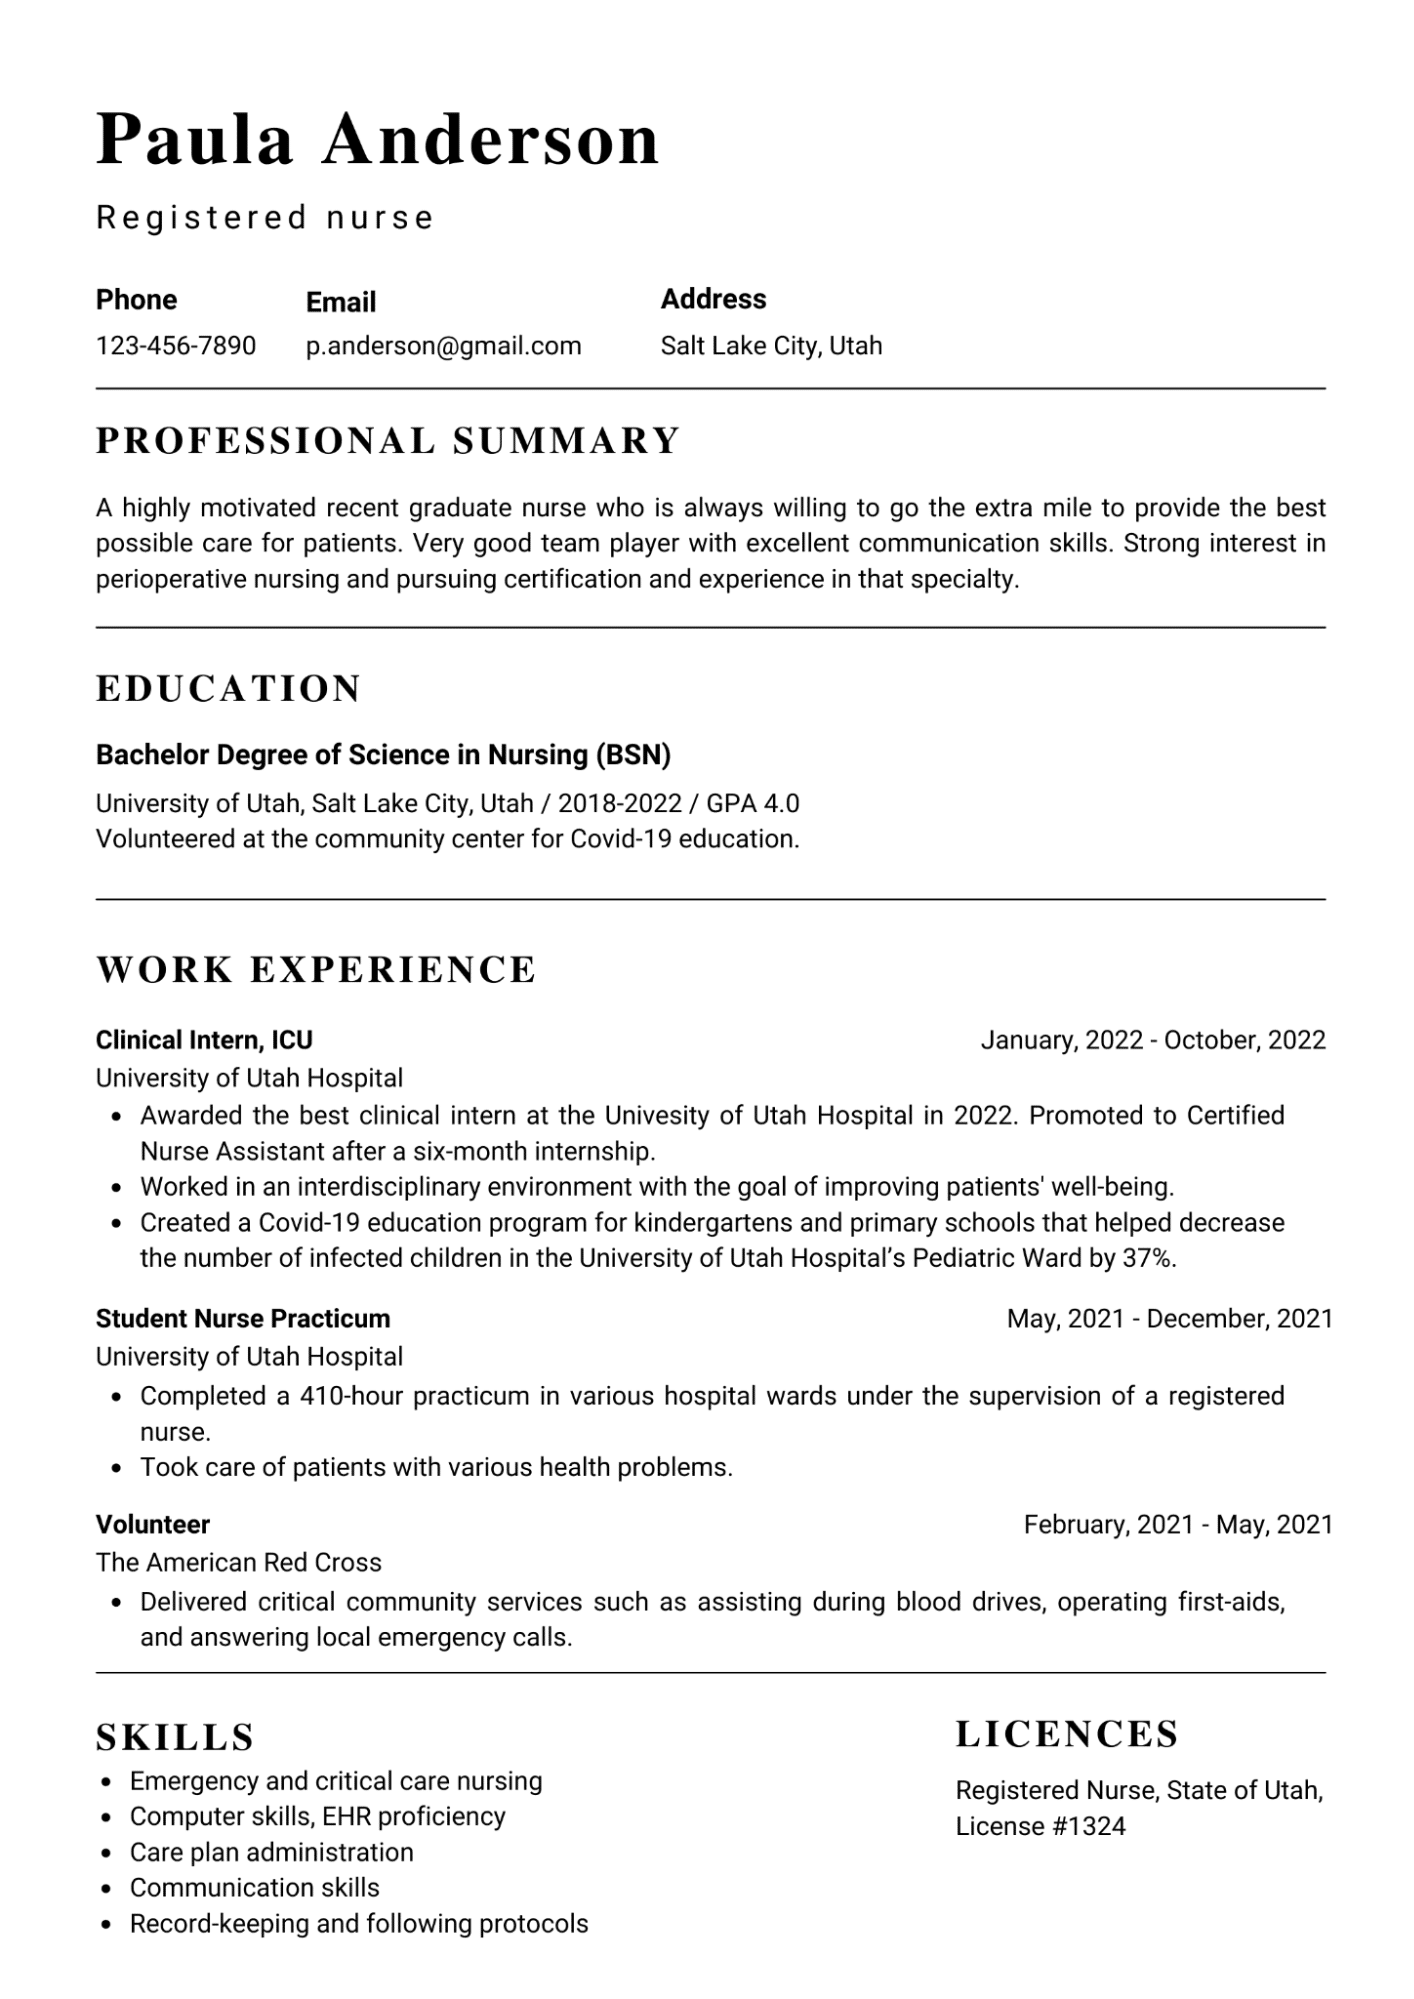 Nursing resume for a recent grad